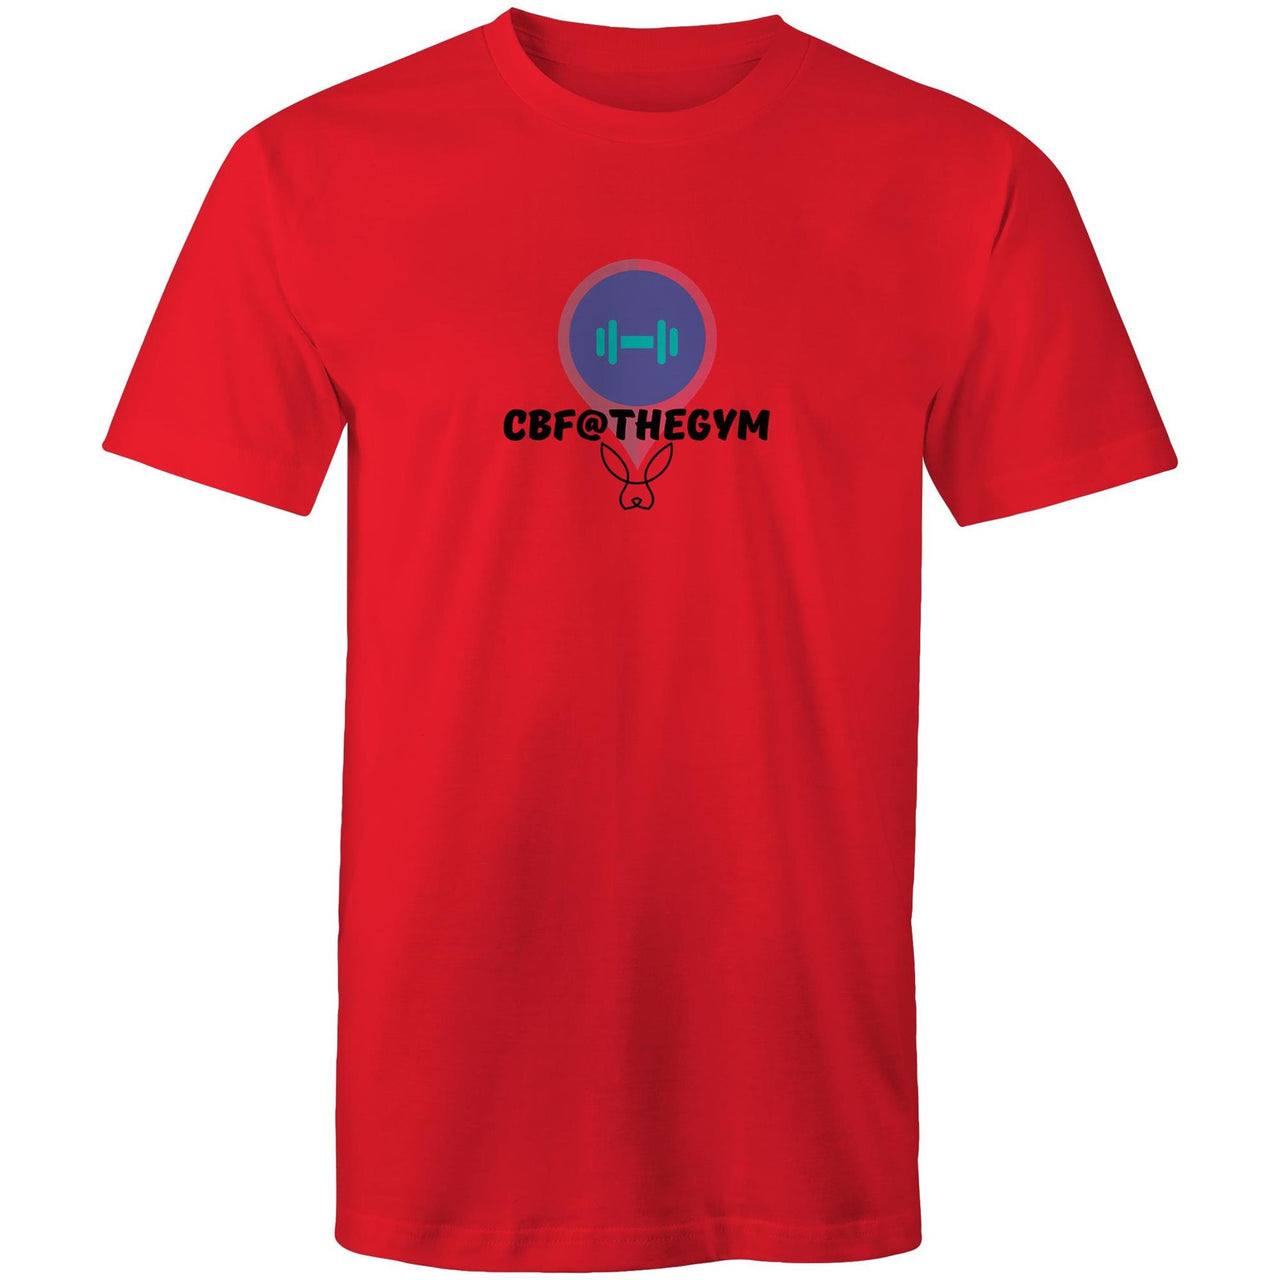 CBF @theGym Locale Crew T-Shirt